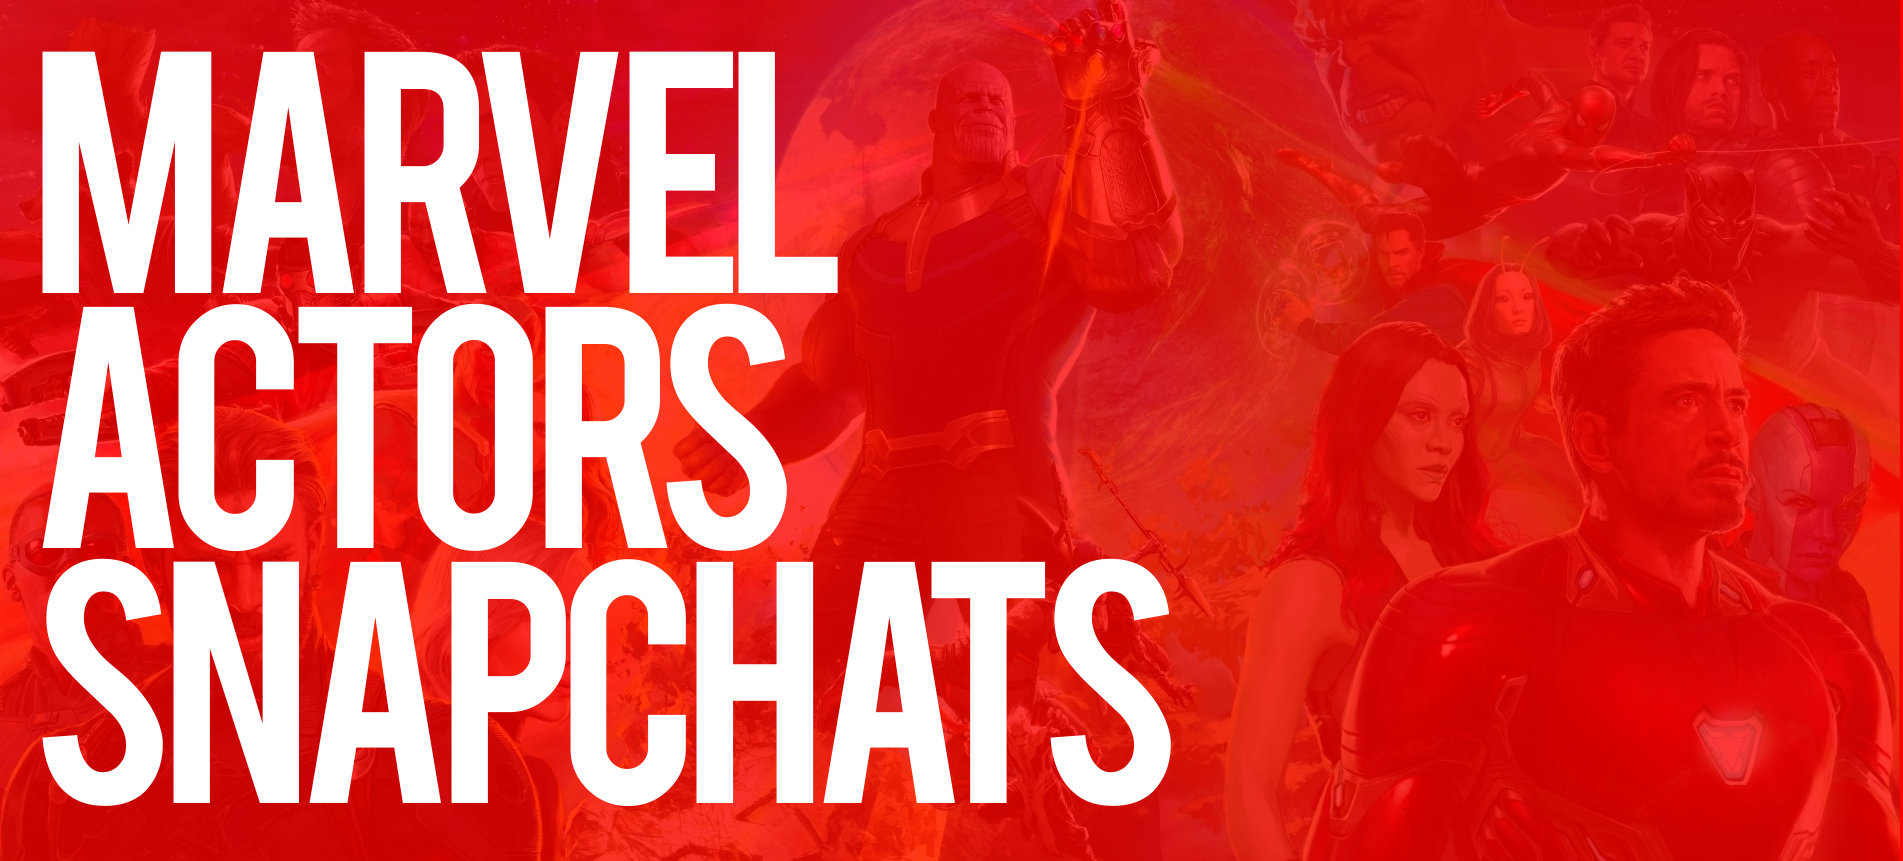 Marvel Actors Snapchats